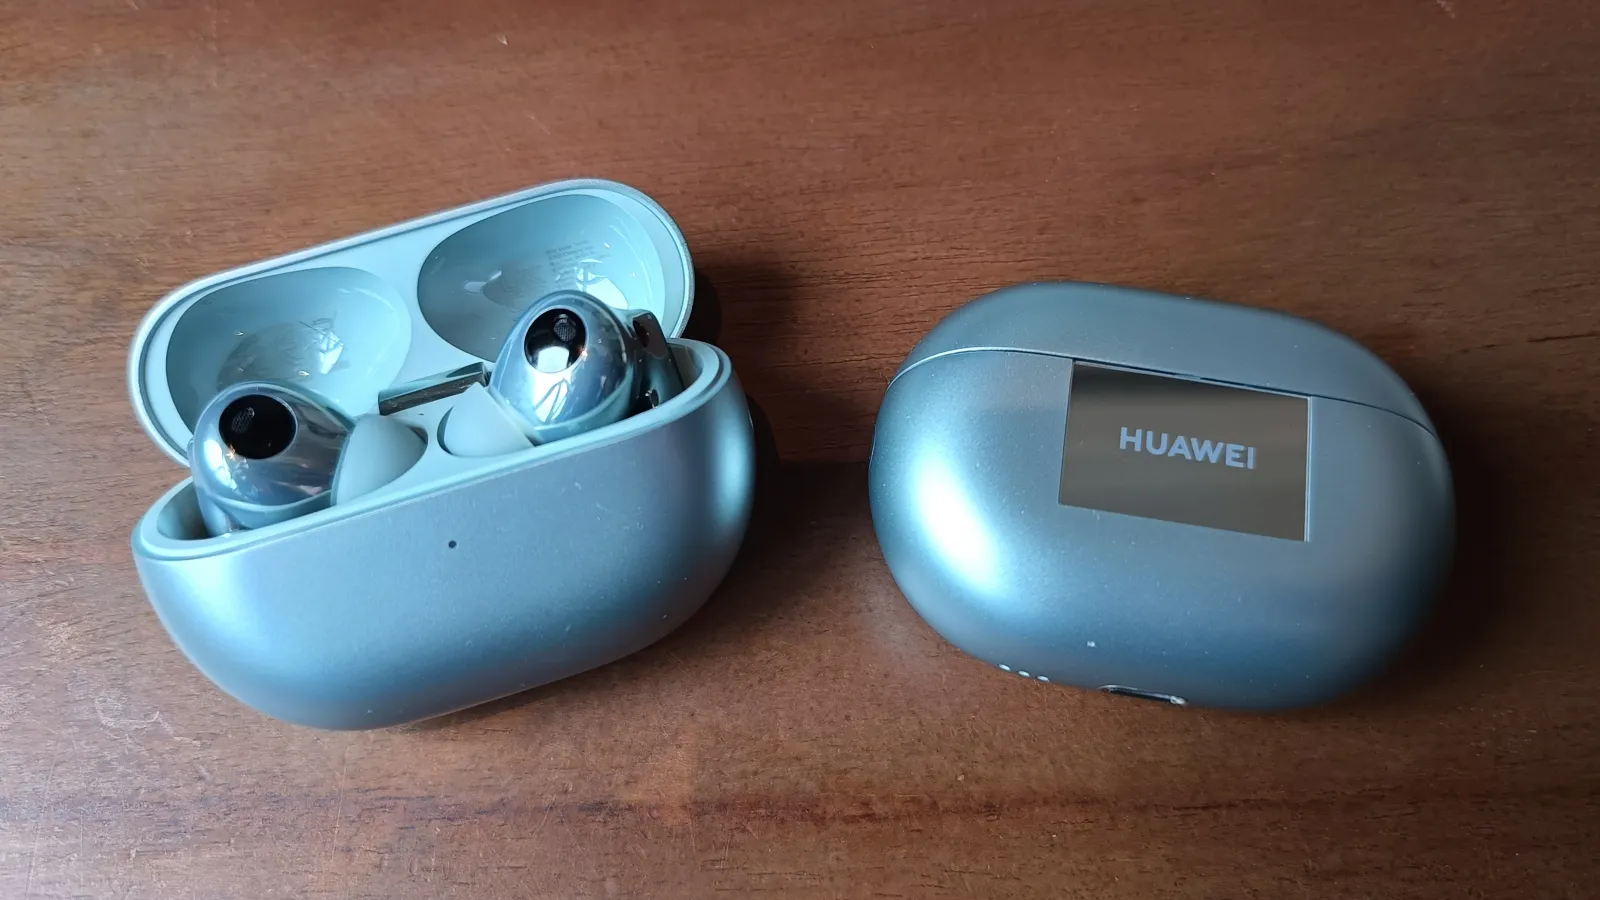 Huawei FreeBuds Pro 3